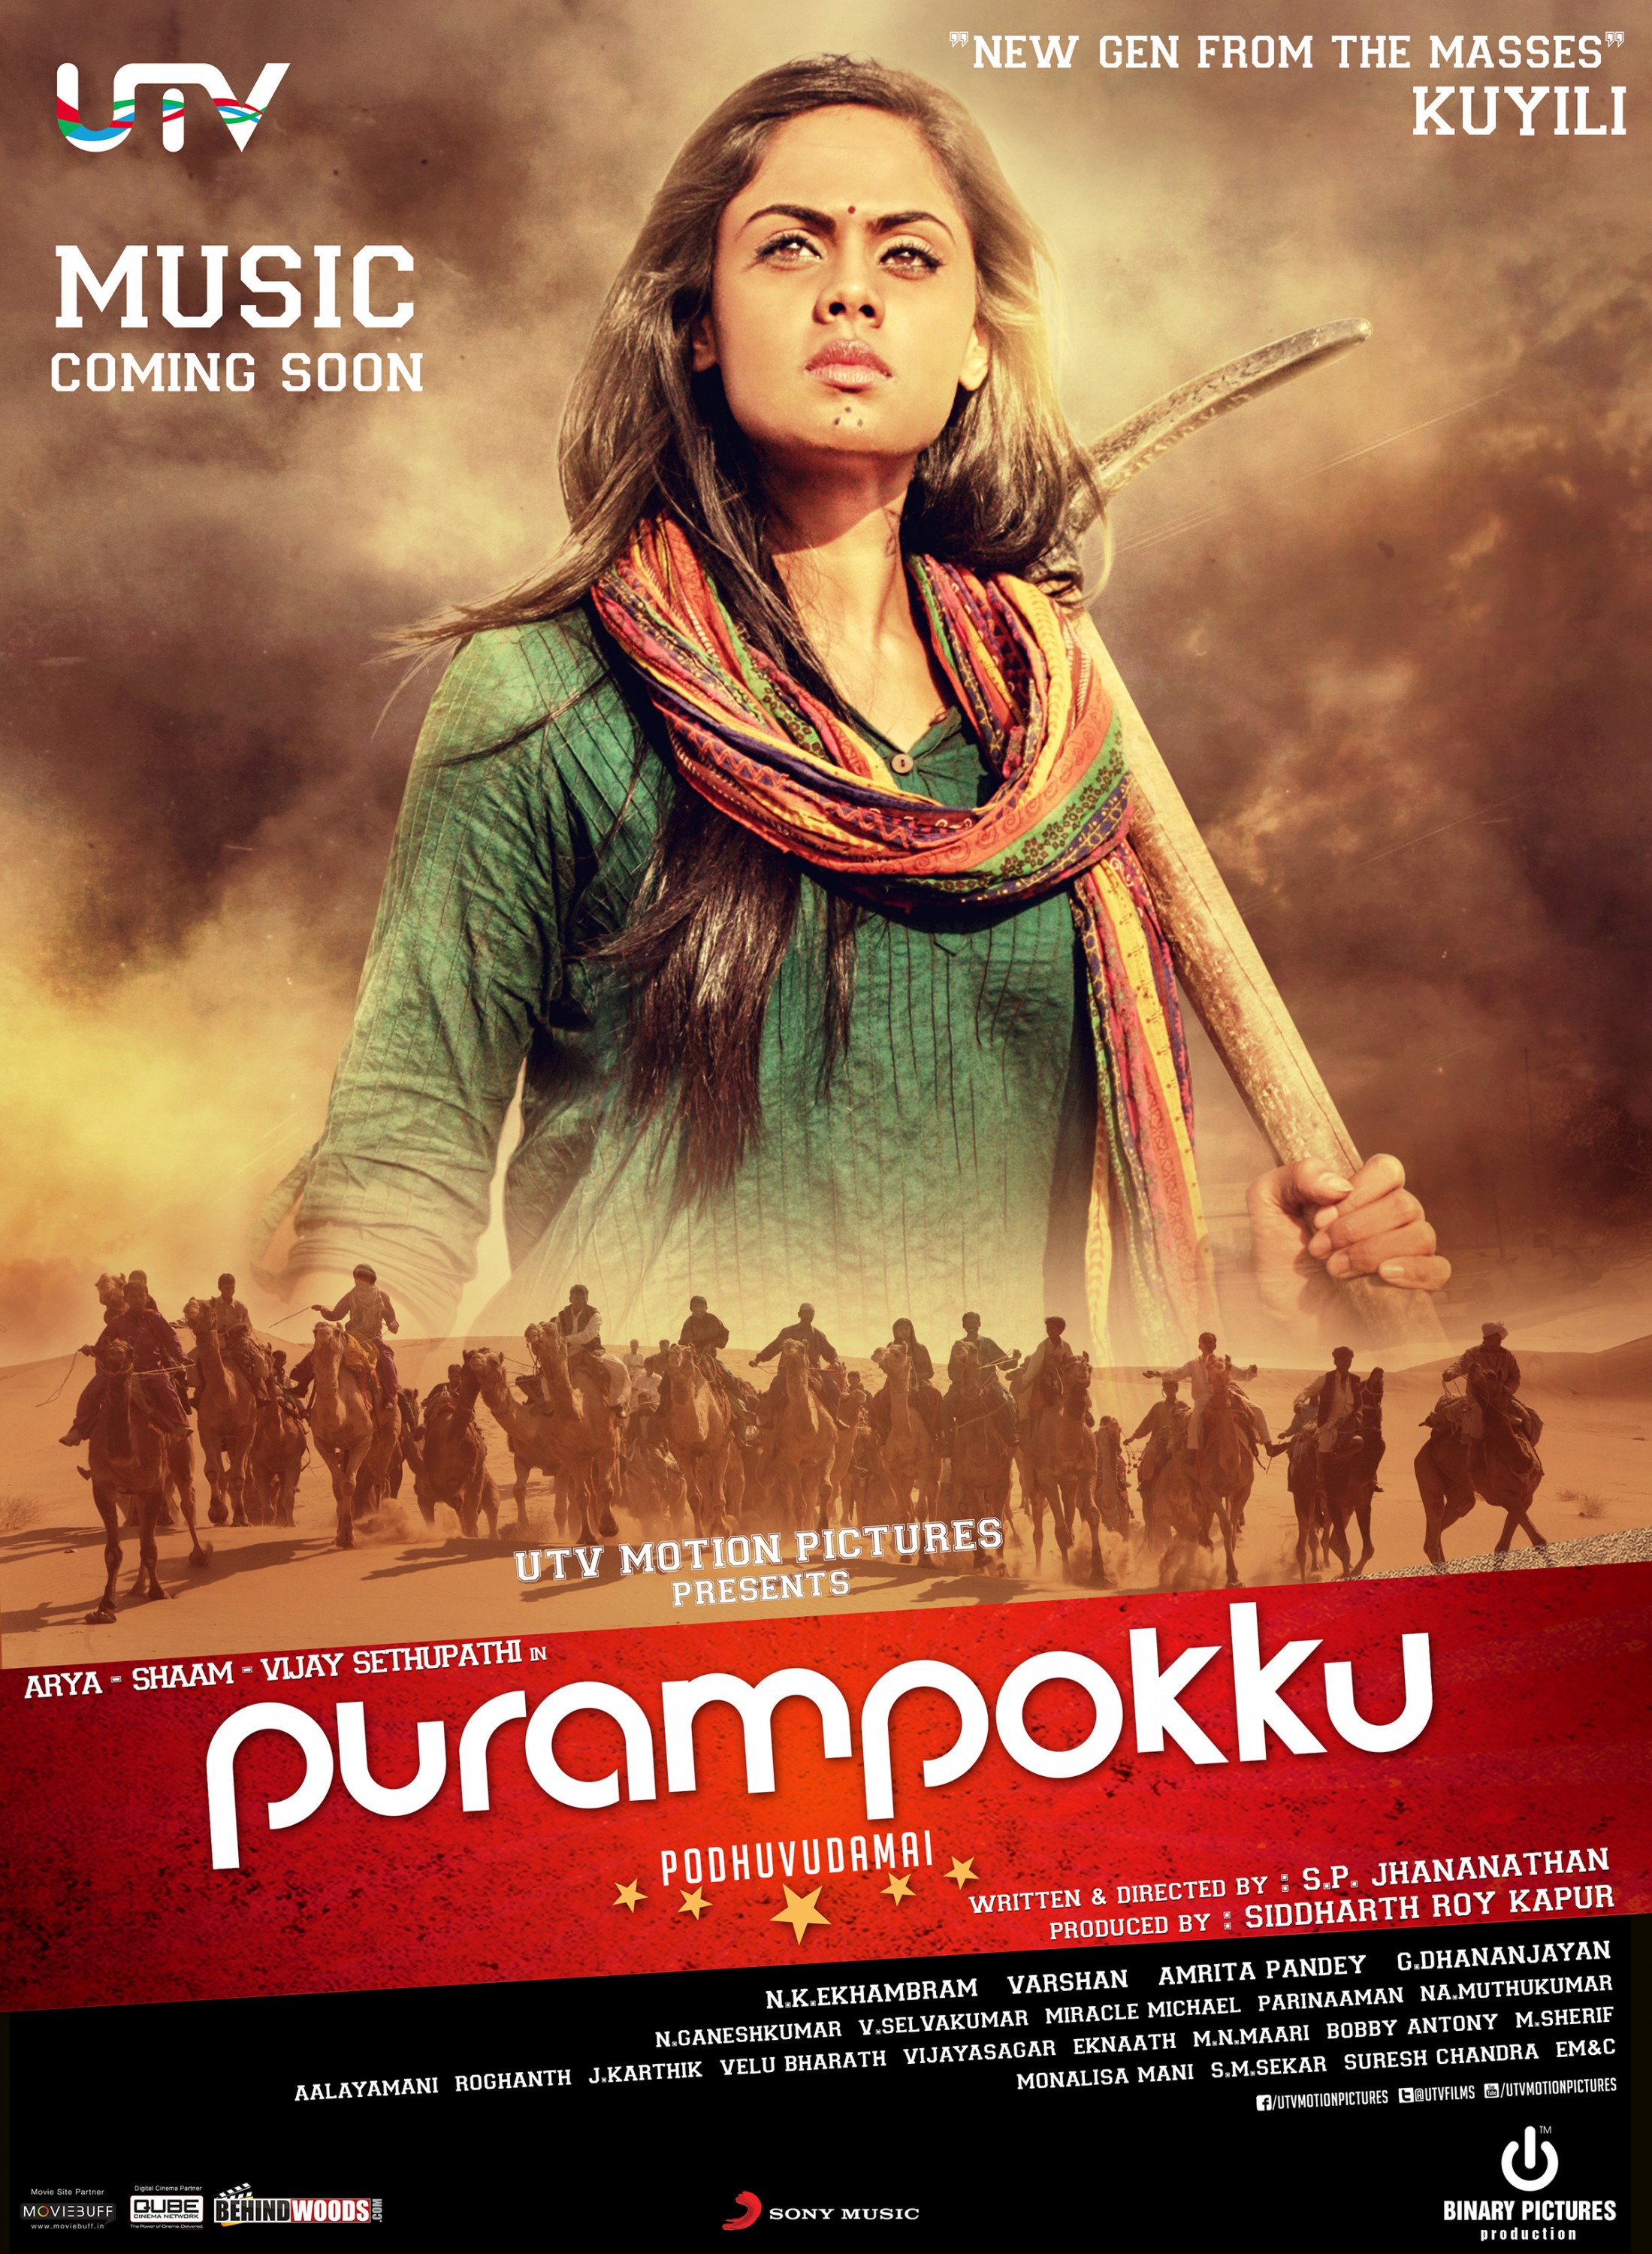 Mega Sized Movie Poster Image for Purampokku Poduvudamai (#2 of 5)